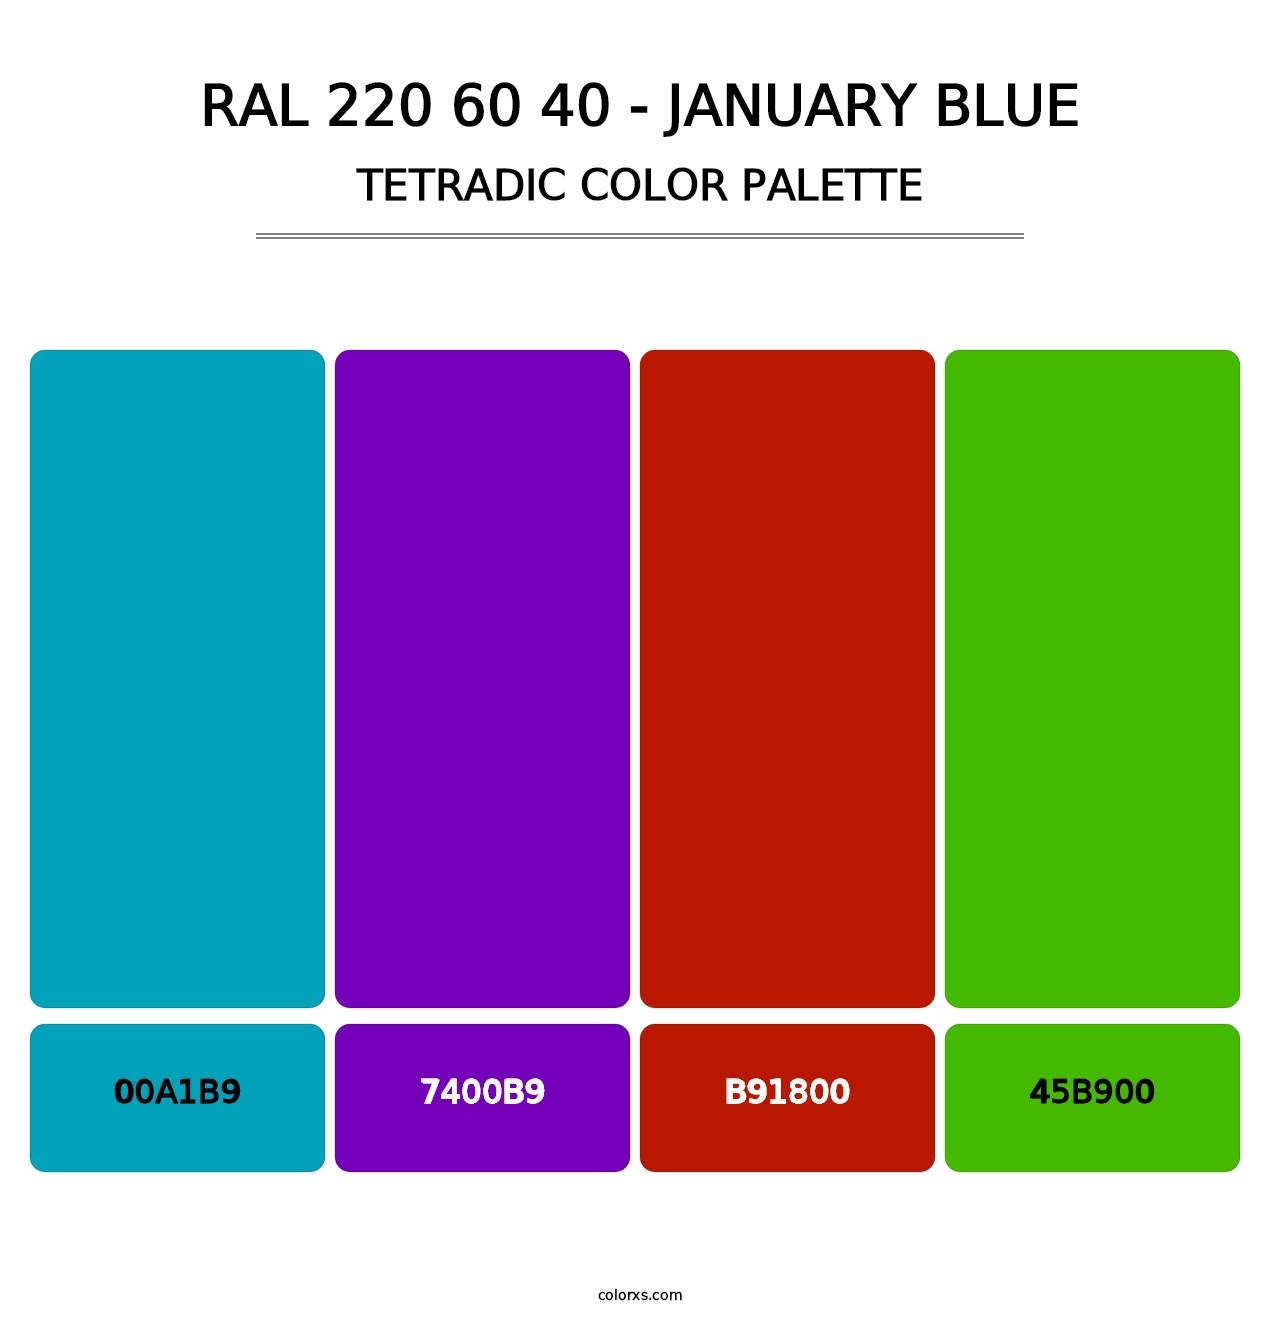 RAL 220 60 40 - January Blue - Tetradic Color Palette